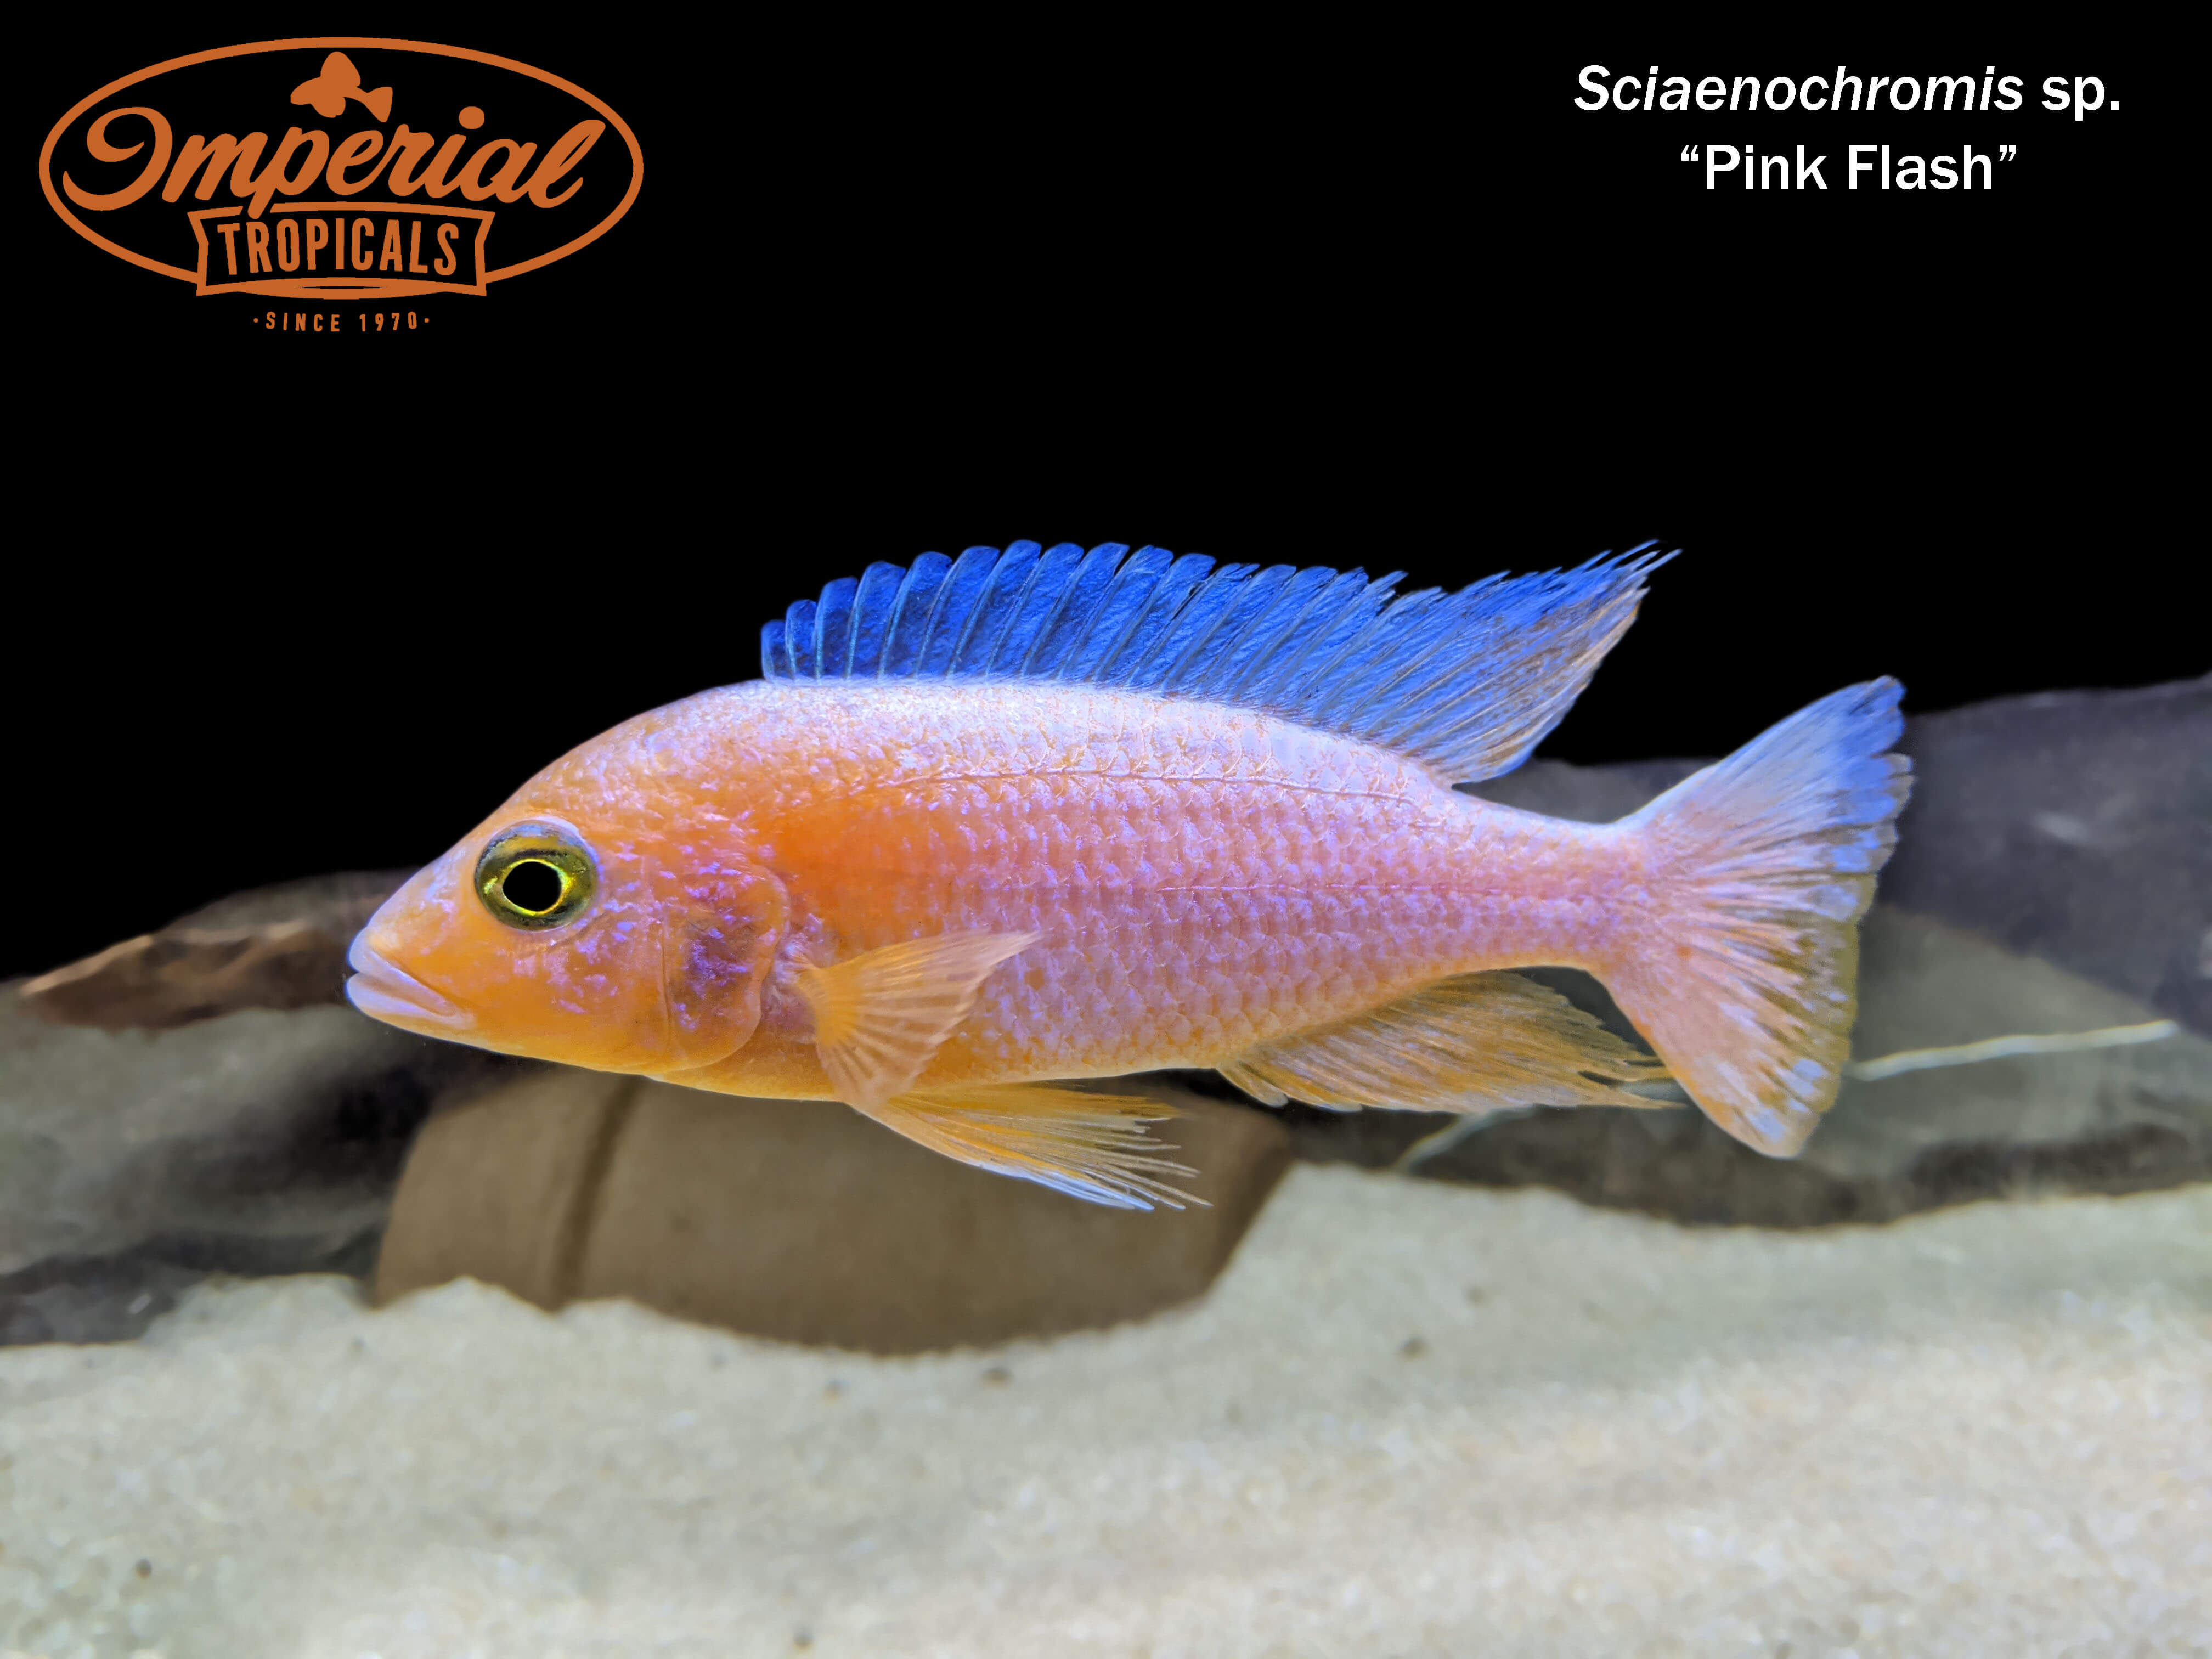 Pink Flash (Sciaenochromis sp.) - shop Imperial Tropicals